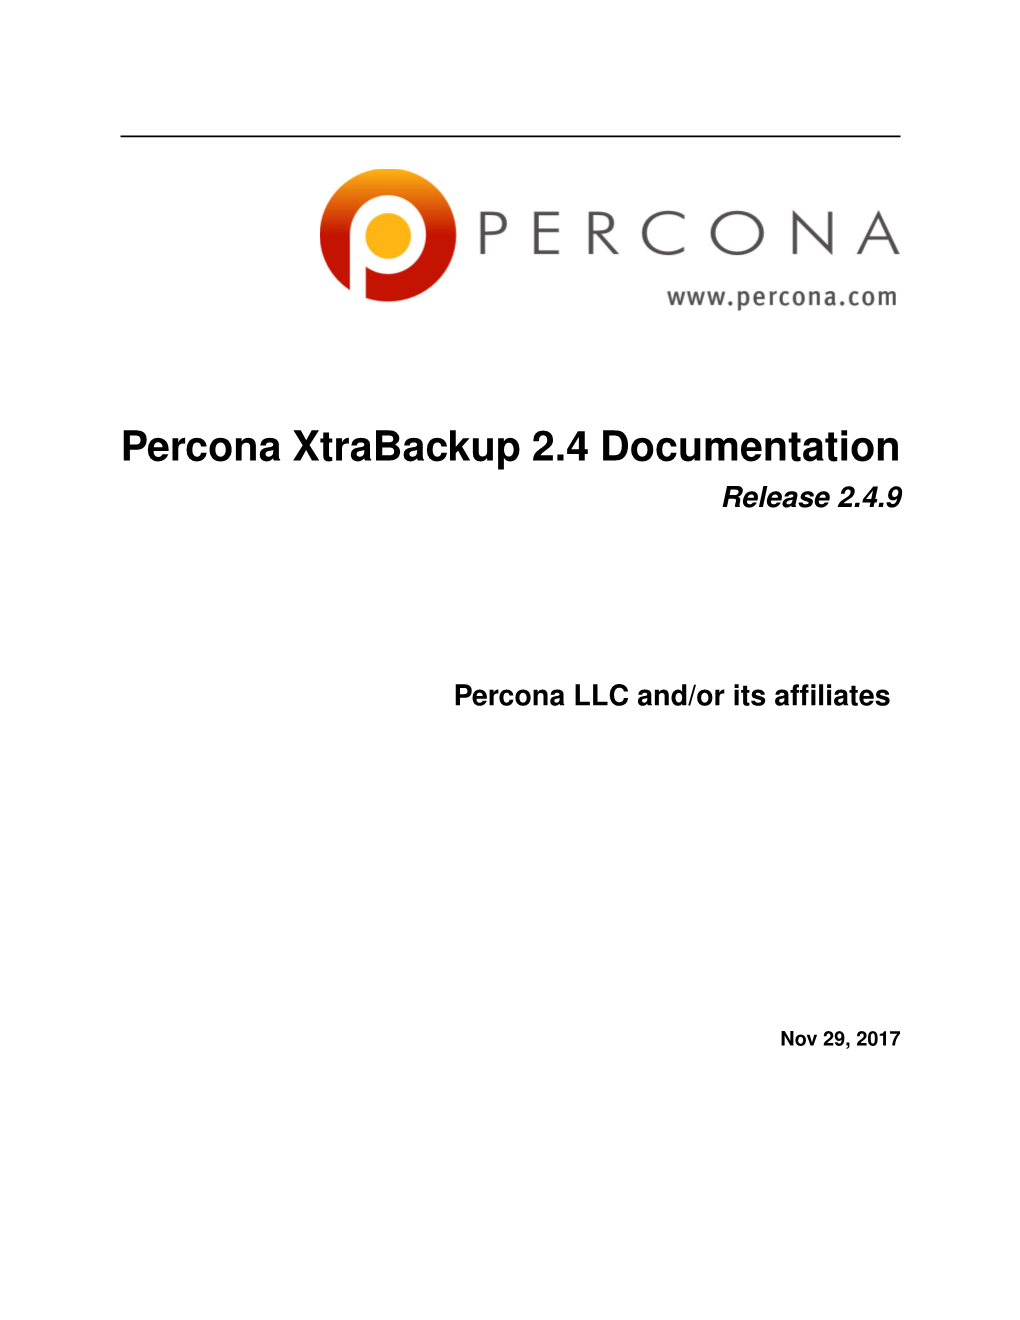 Percona Xtrabackup 2.4 Documentation Release 2.4.9